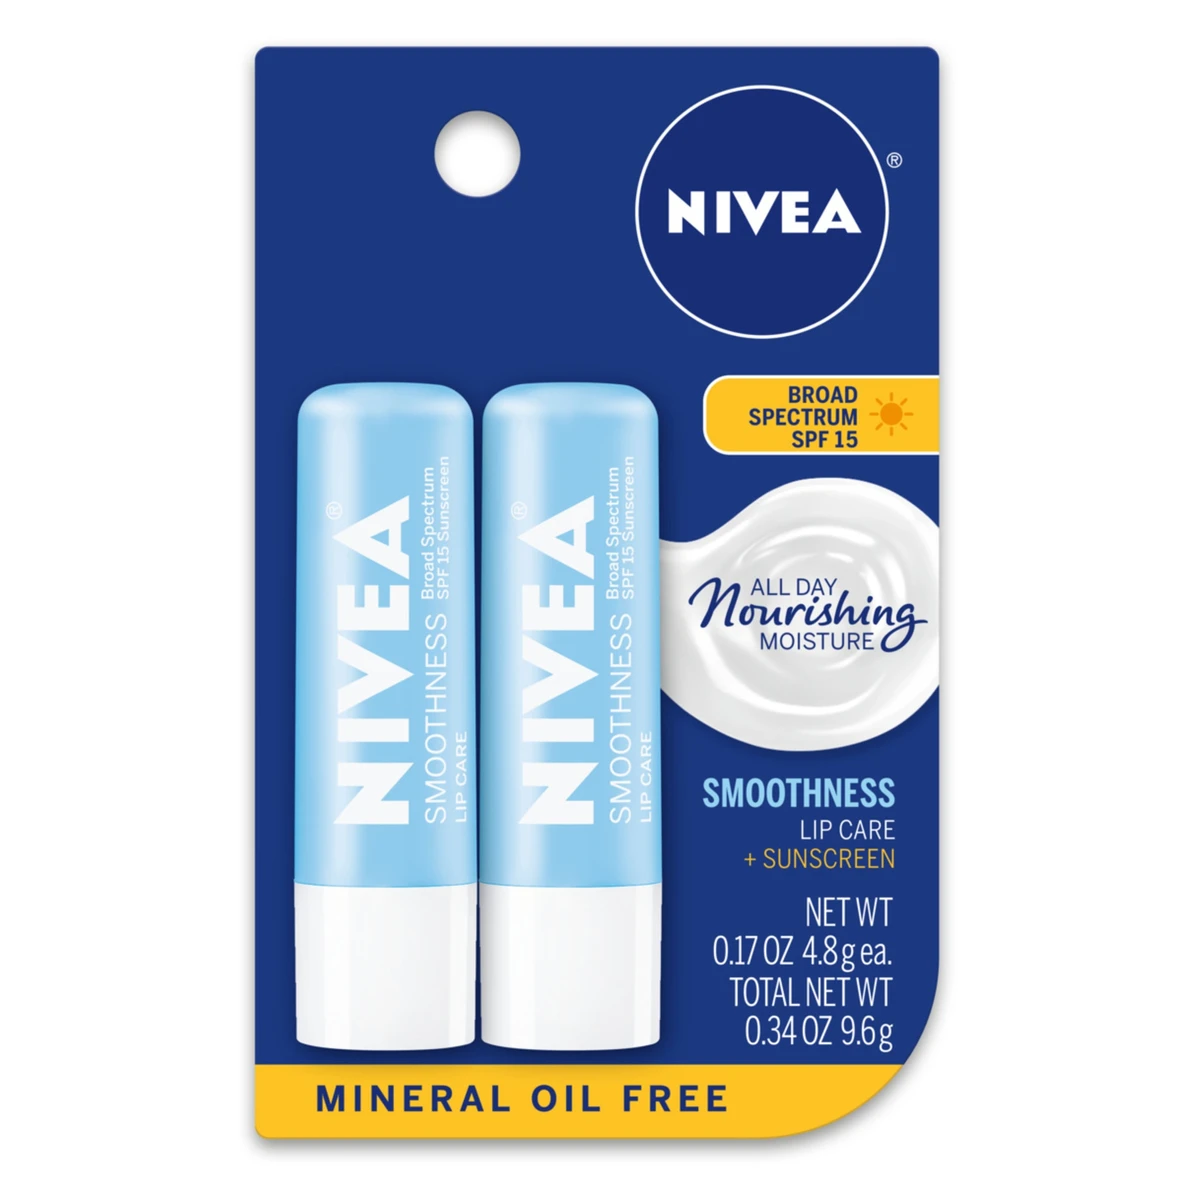 NIVEA Smoothness Lip Balm Dual Pack